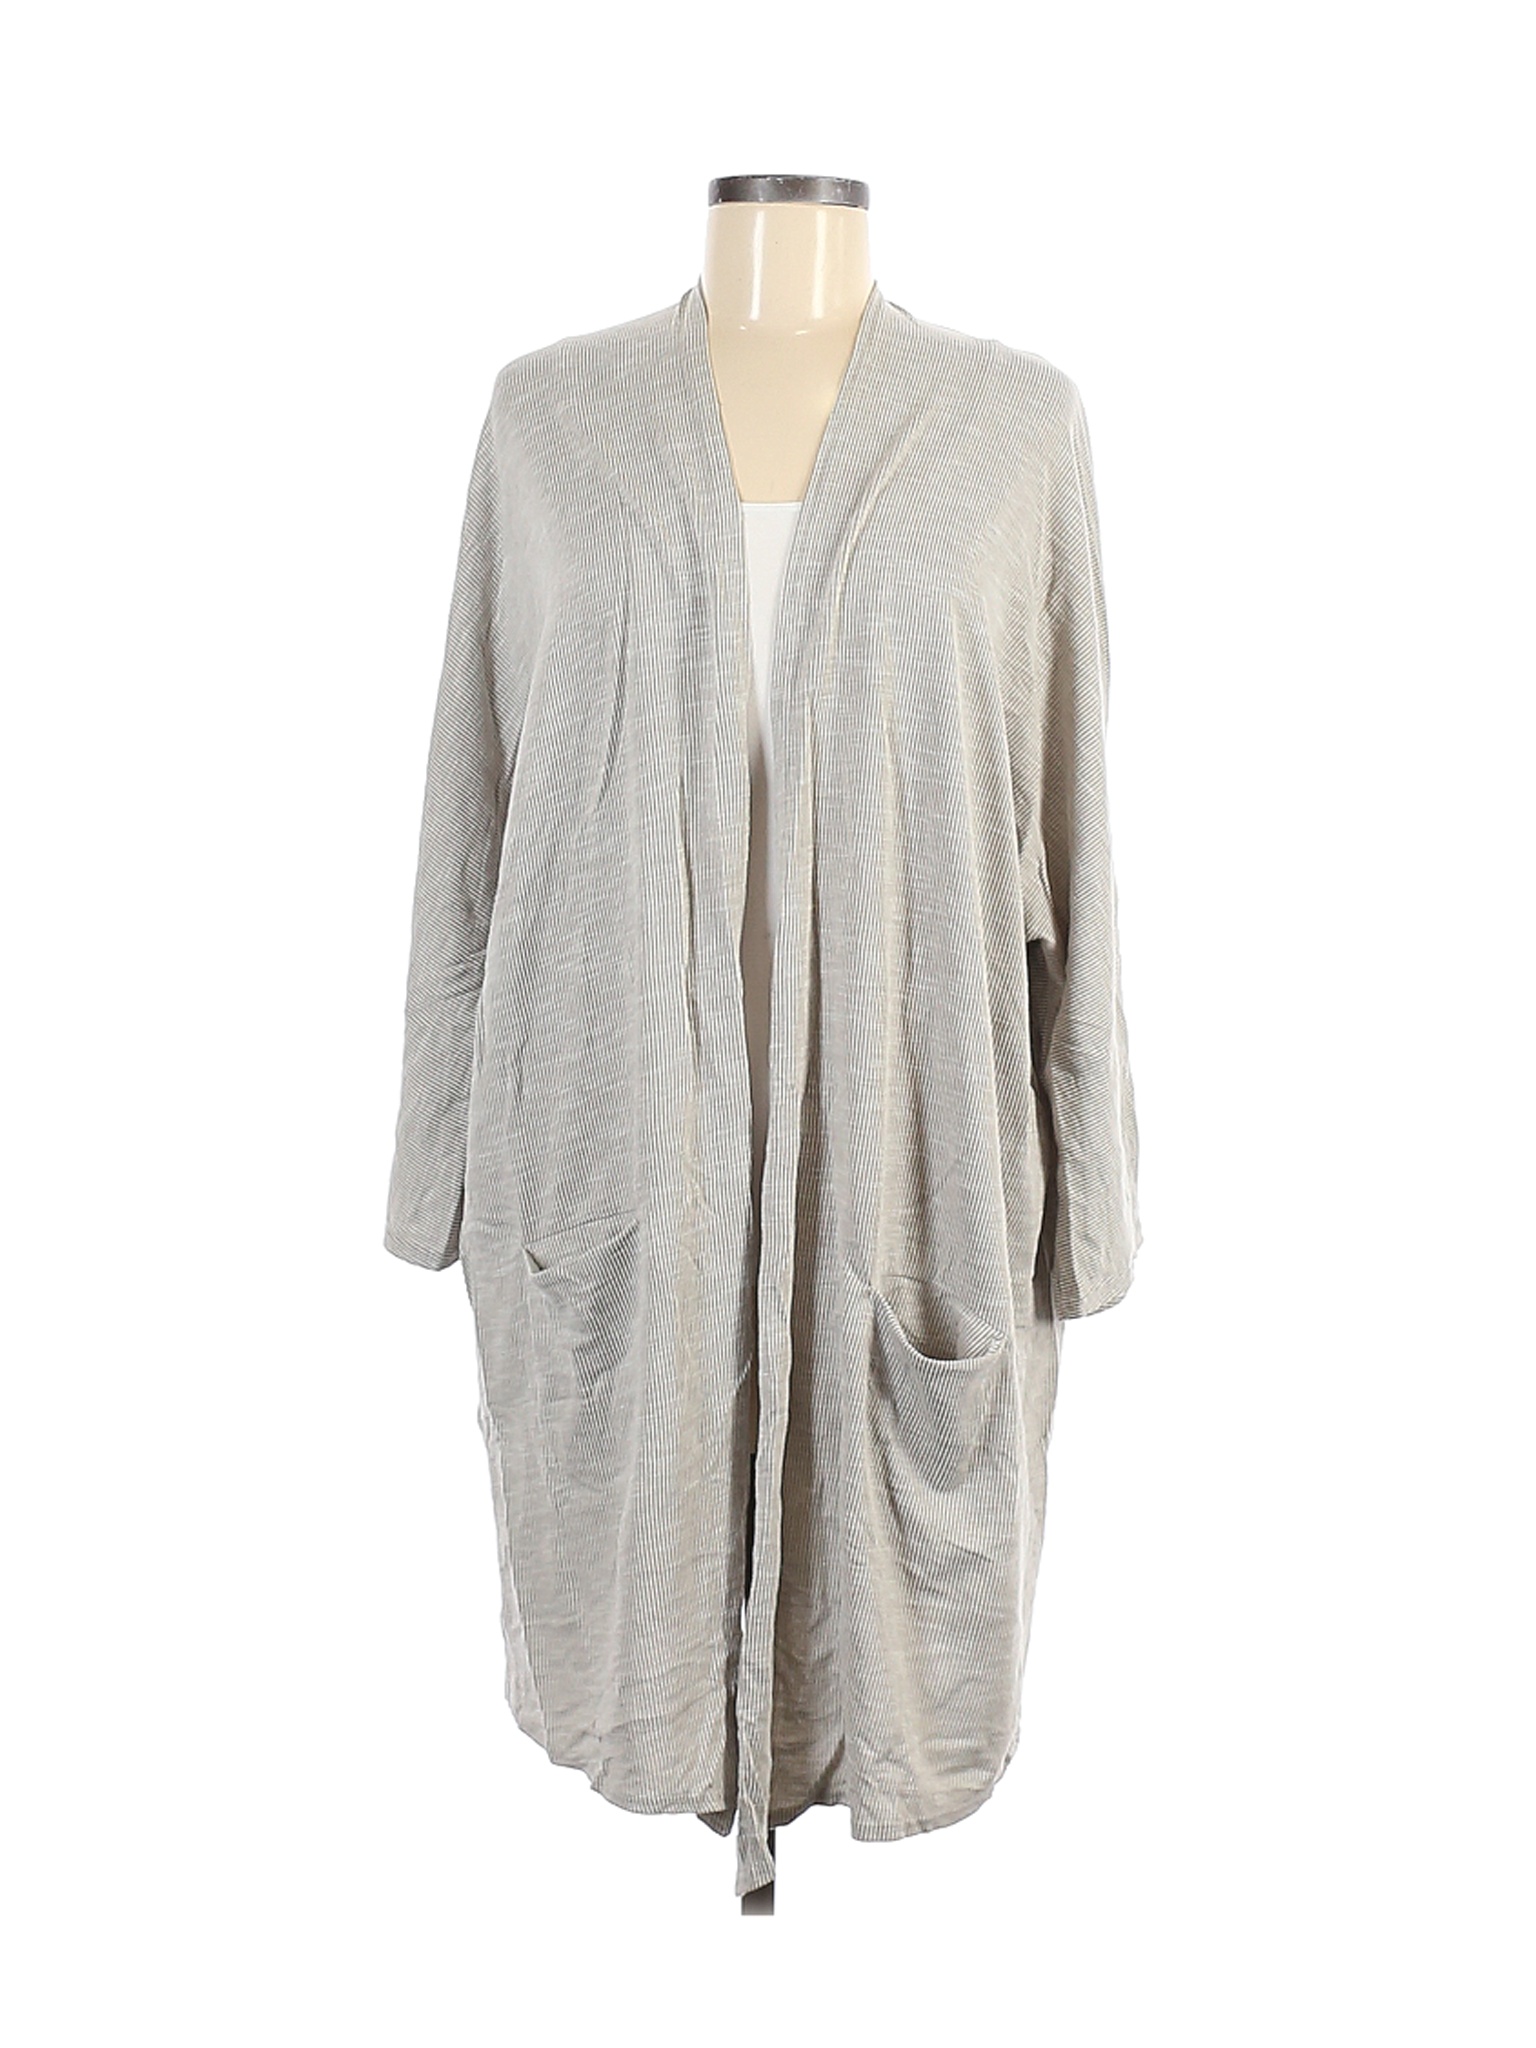 DONNI Women Gray Cardigan One Size Plus | eBay